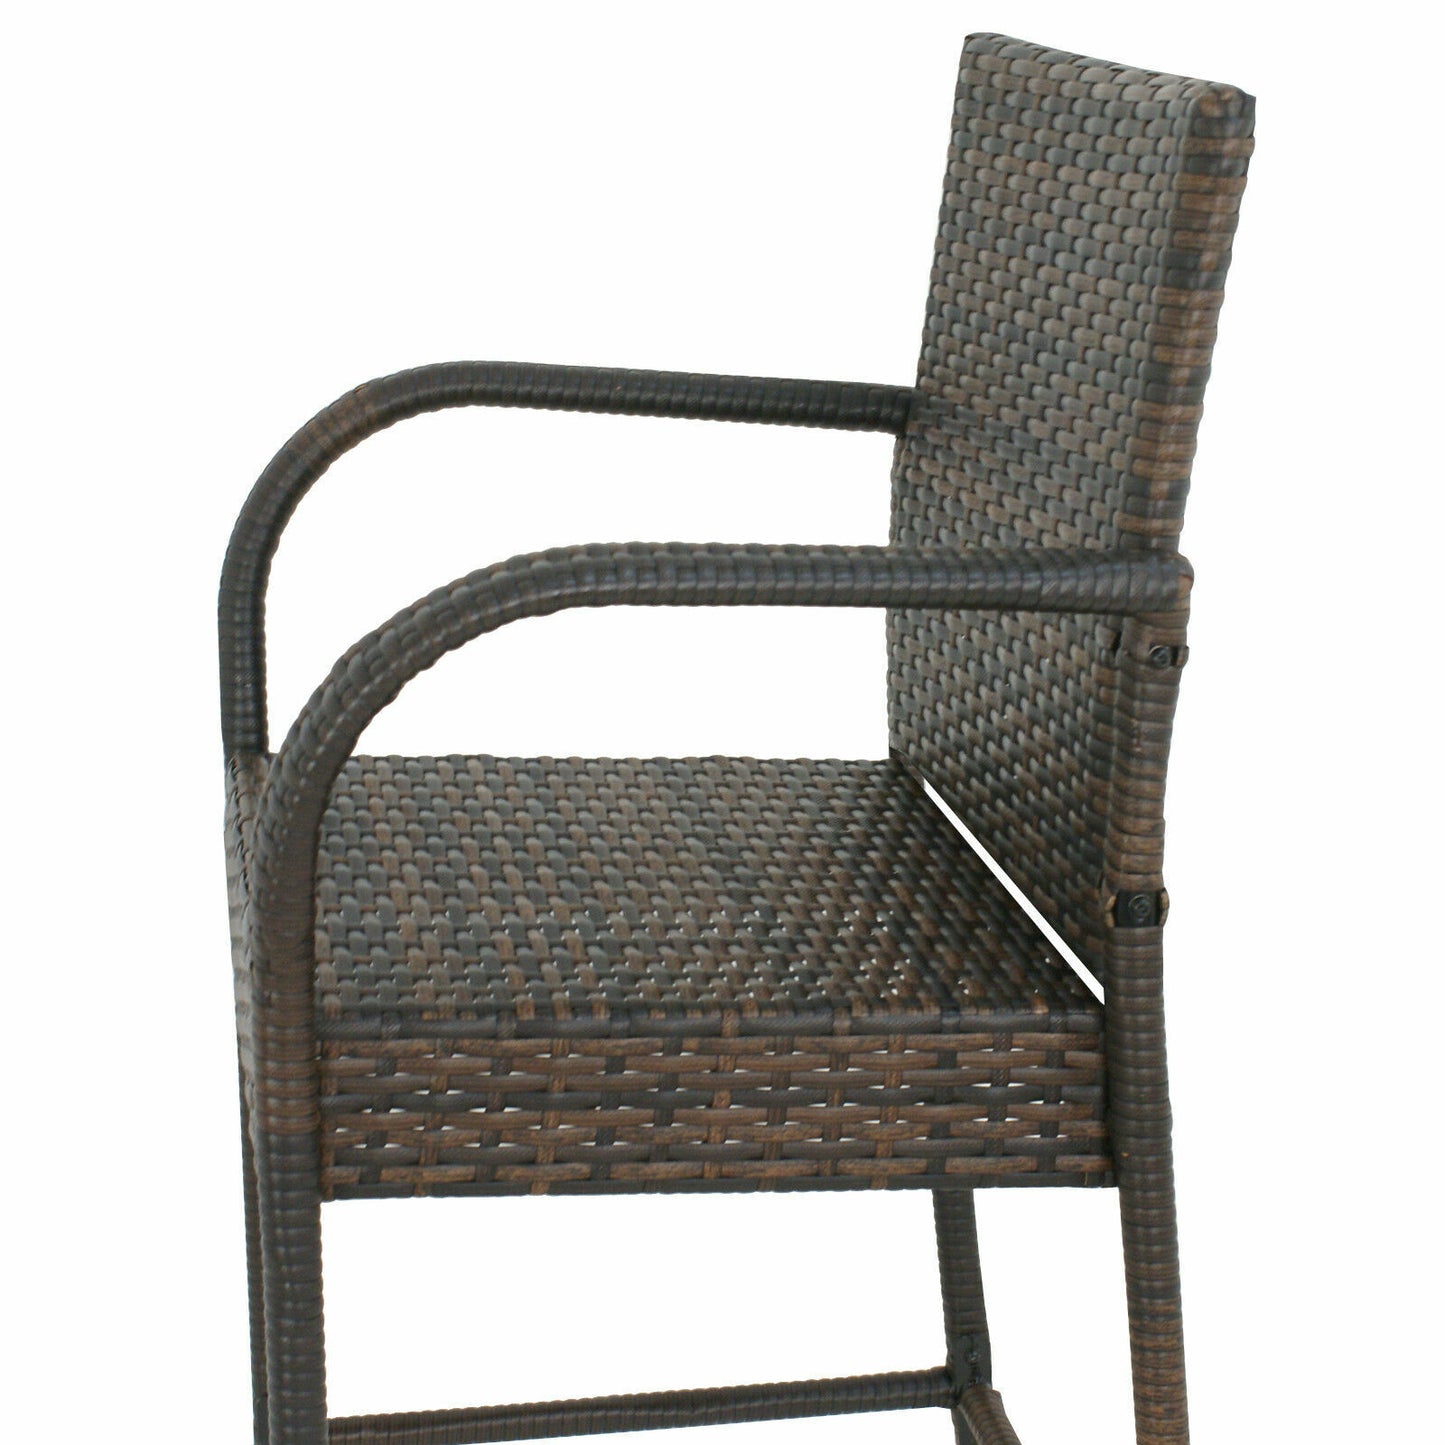 4 Pack Wicker Bar Stool Rattan Chair Patio Furniture Chair Outdoor Backyard